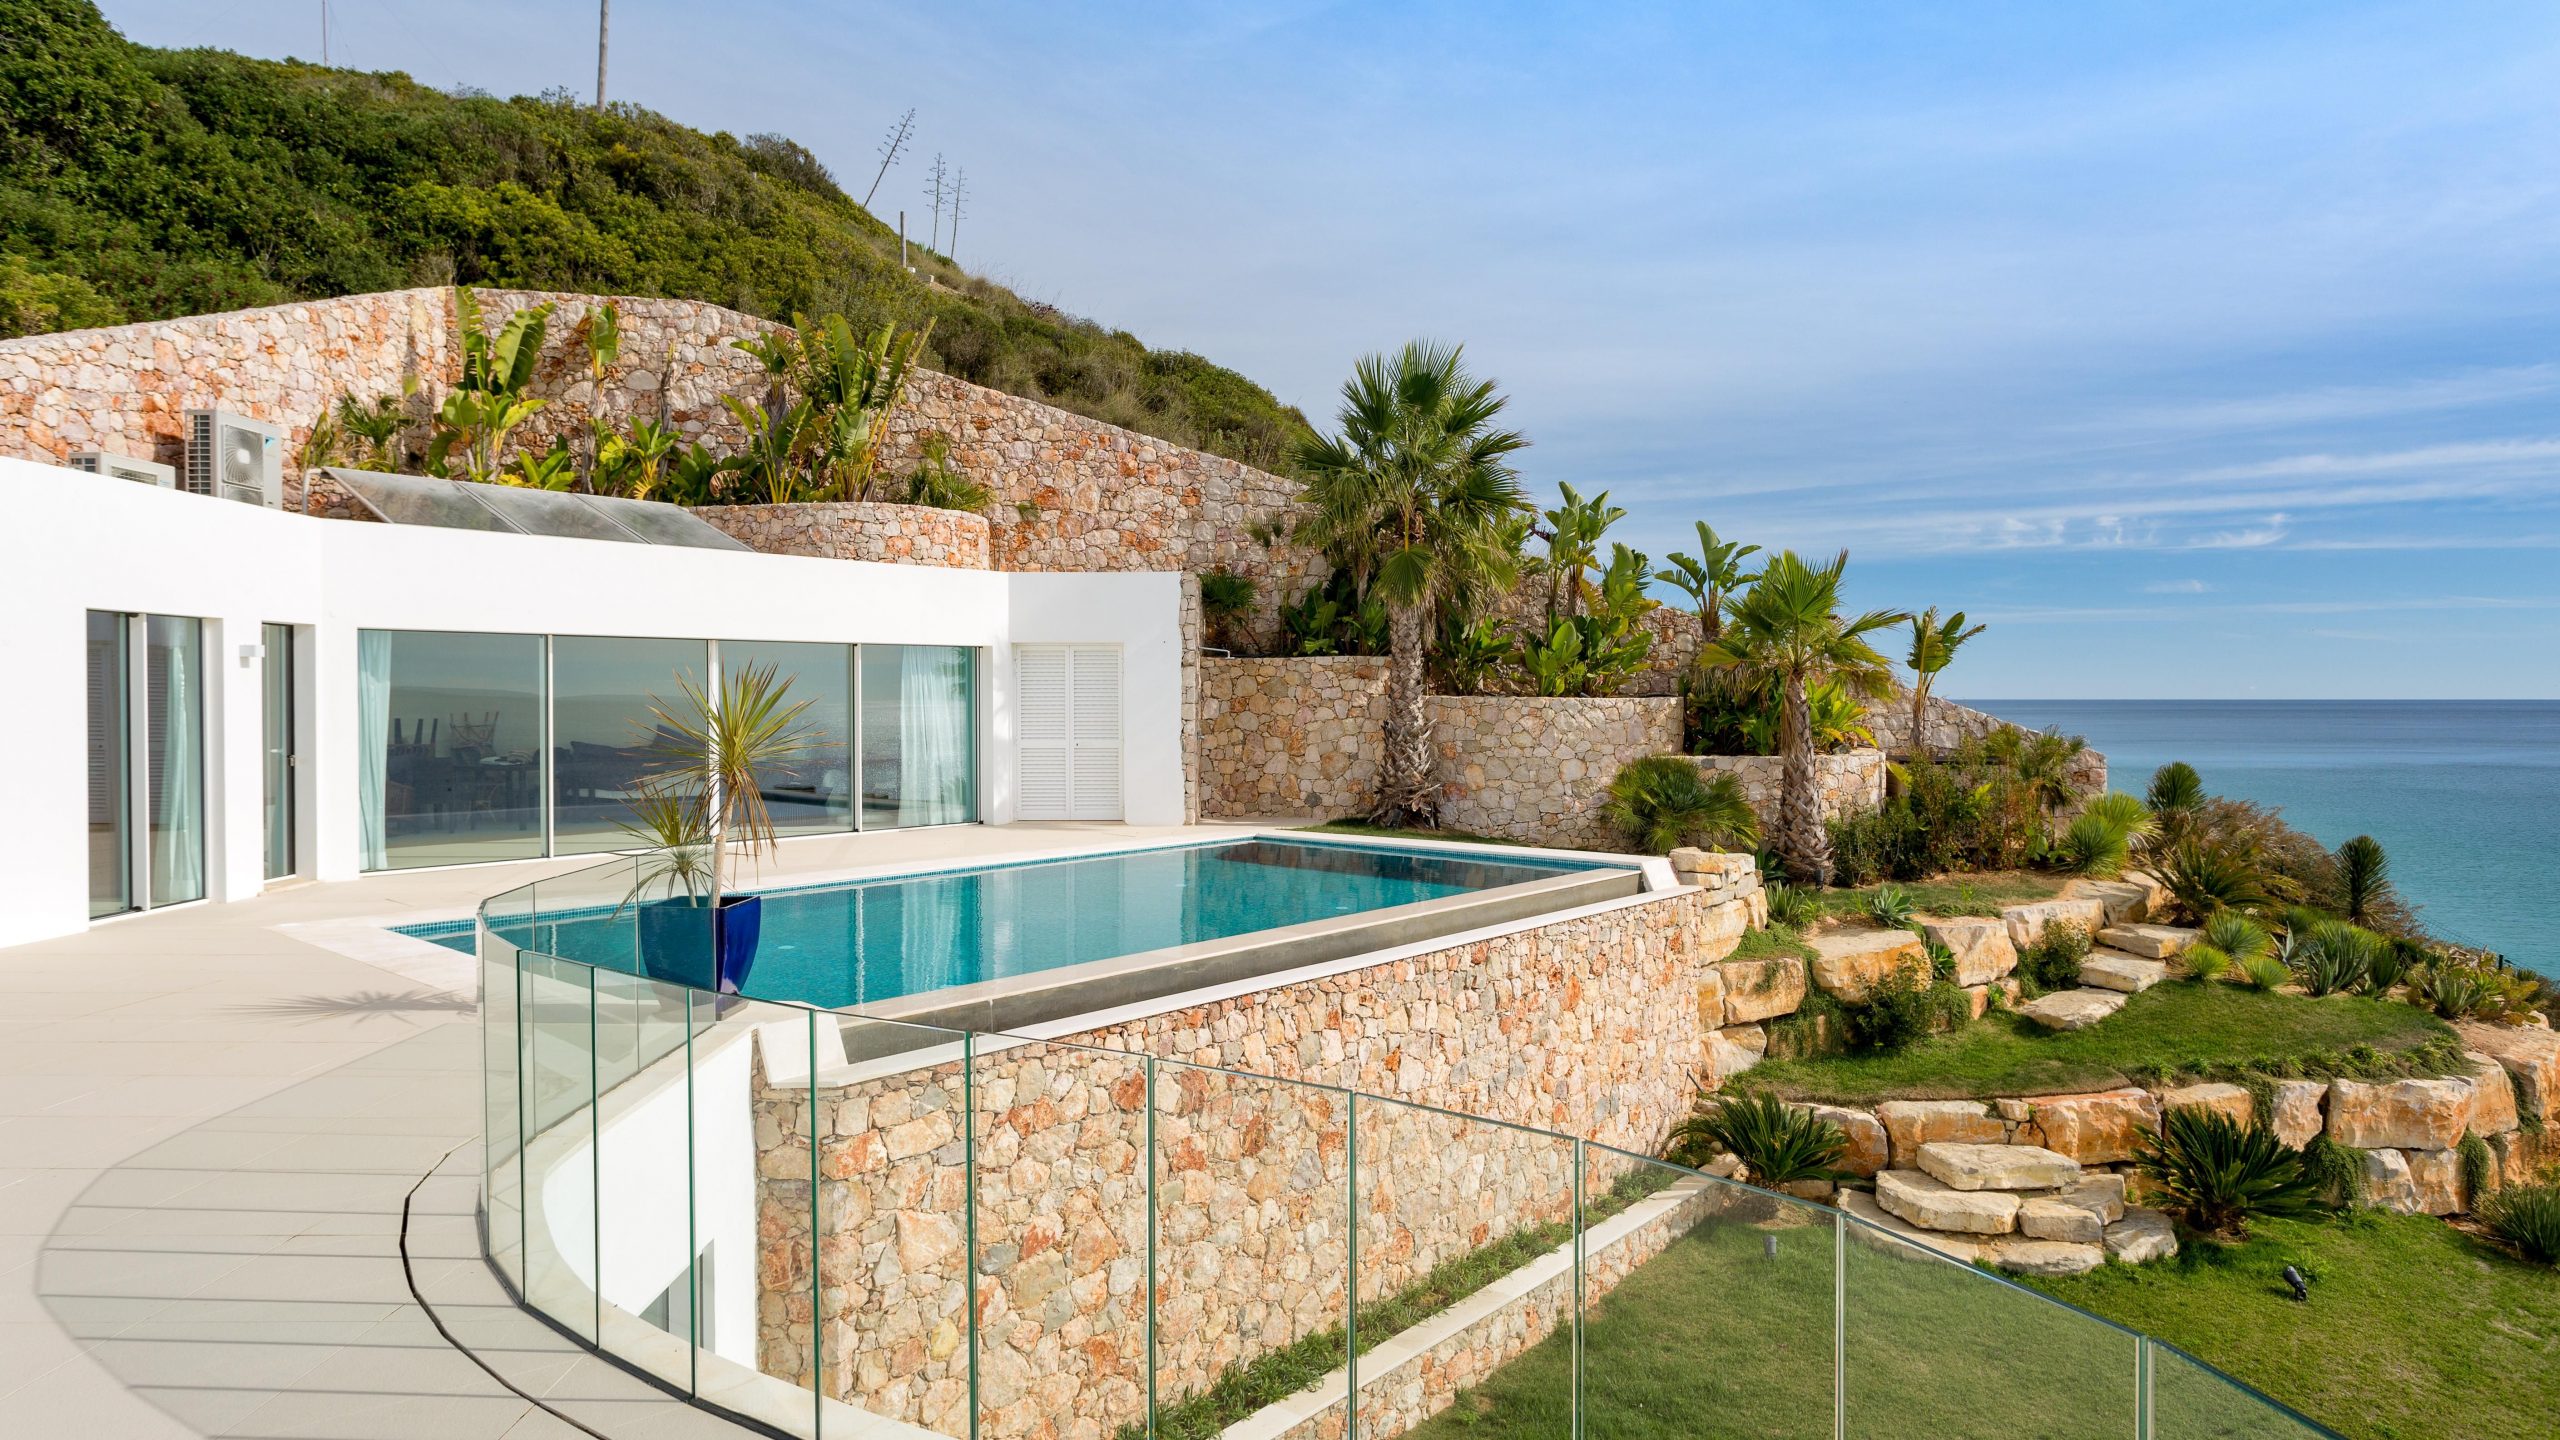 Ten Great Villas To Book In Portugal | Luxury Villa Rentals ... tout Location Maison Avec Piscine Portugal